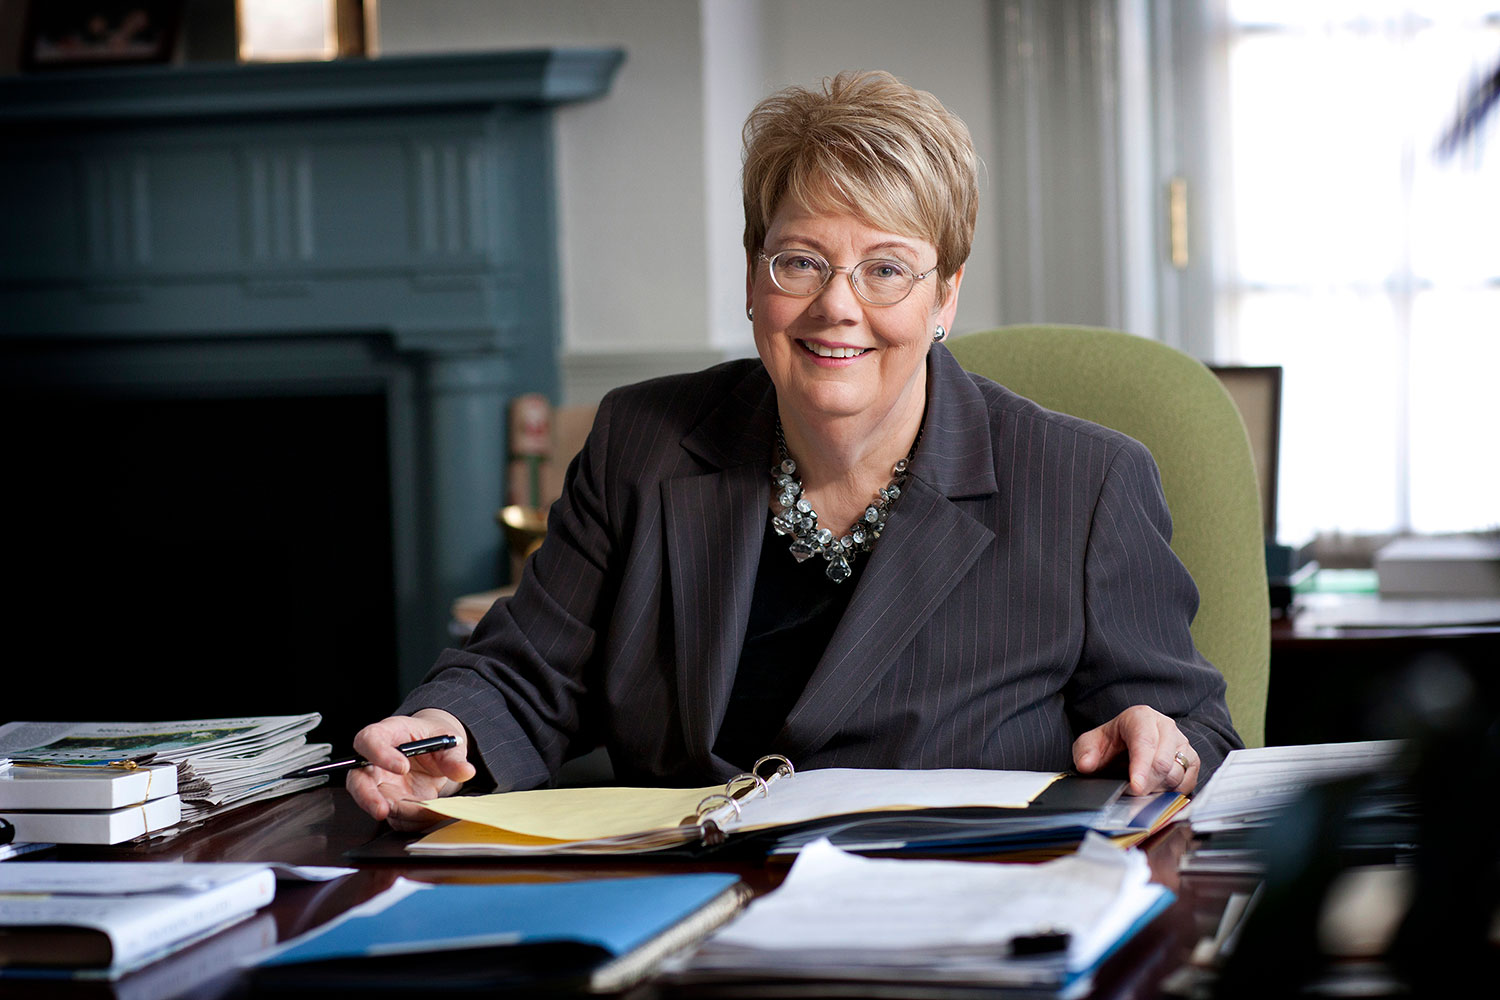 UVA President Teresa A. Sullivan sitting at desk smiling at camera